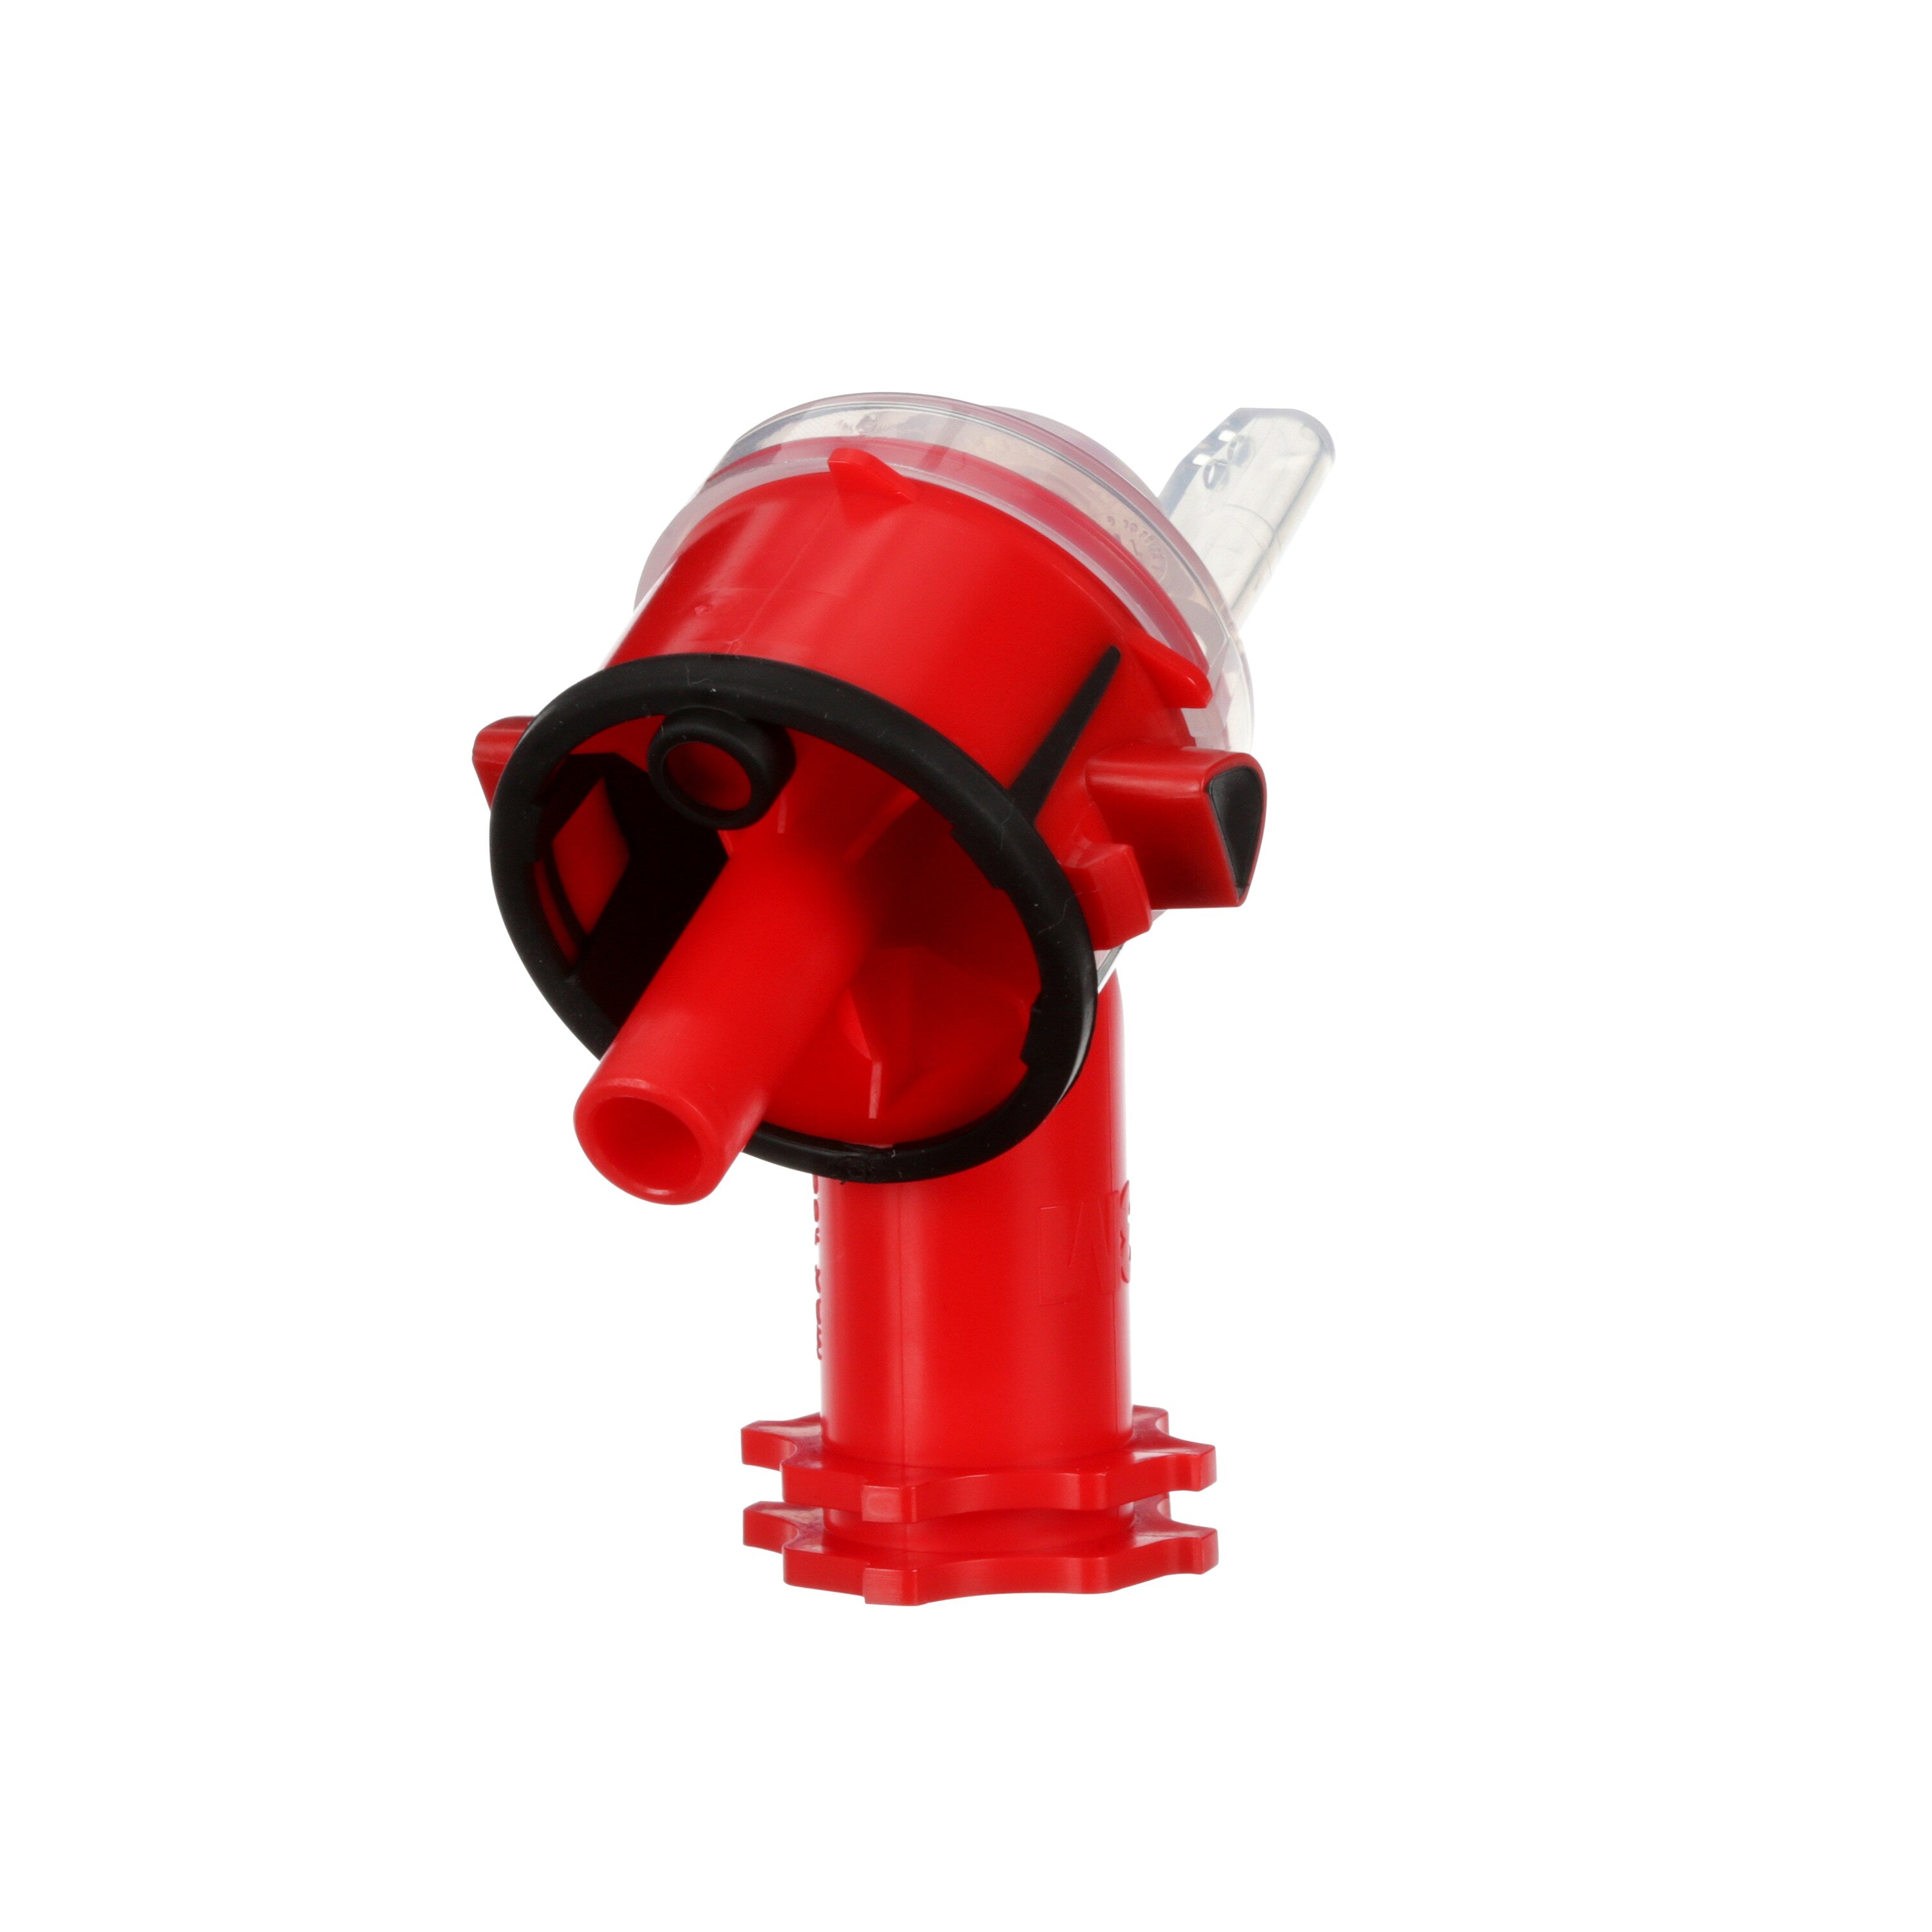 3M™ Accuspray™ Atomizing Head, 16609, Red, 2.0 mm, 4 per kit